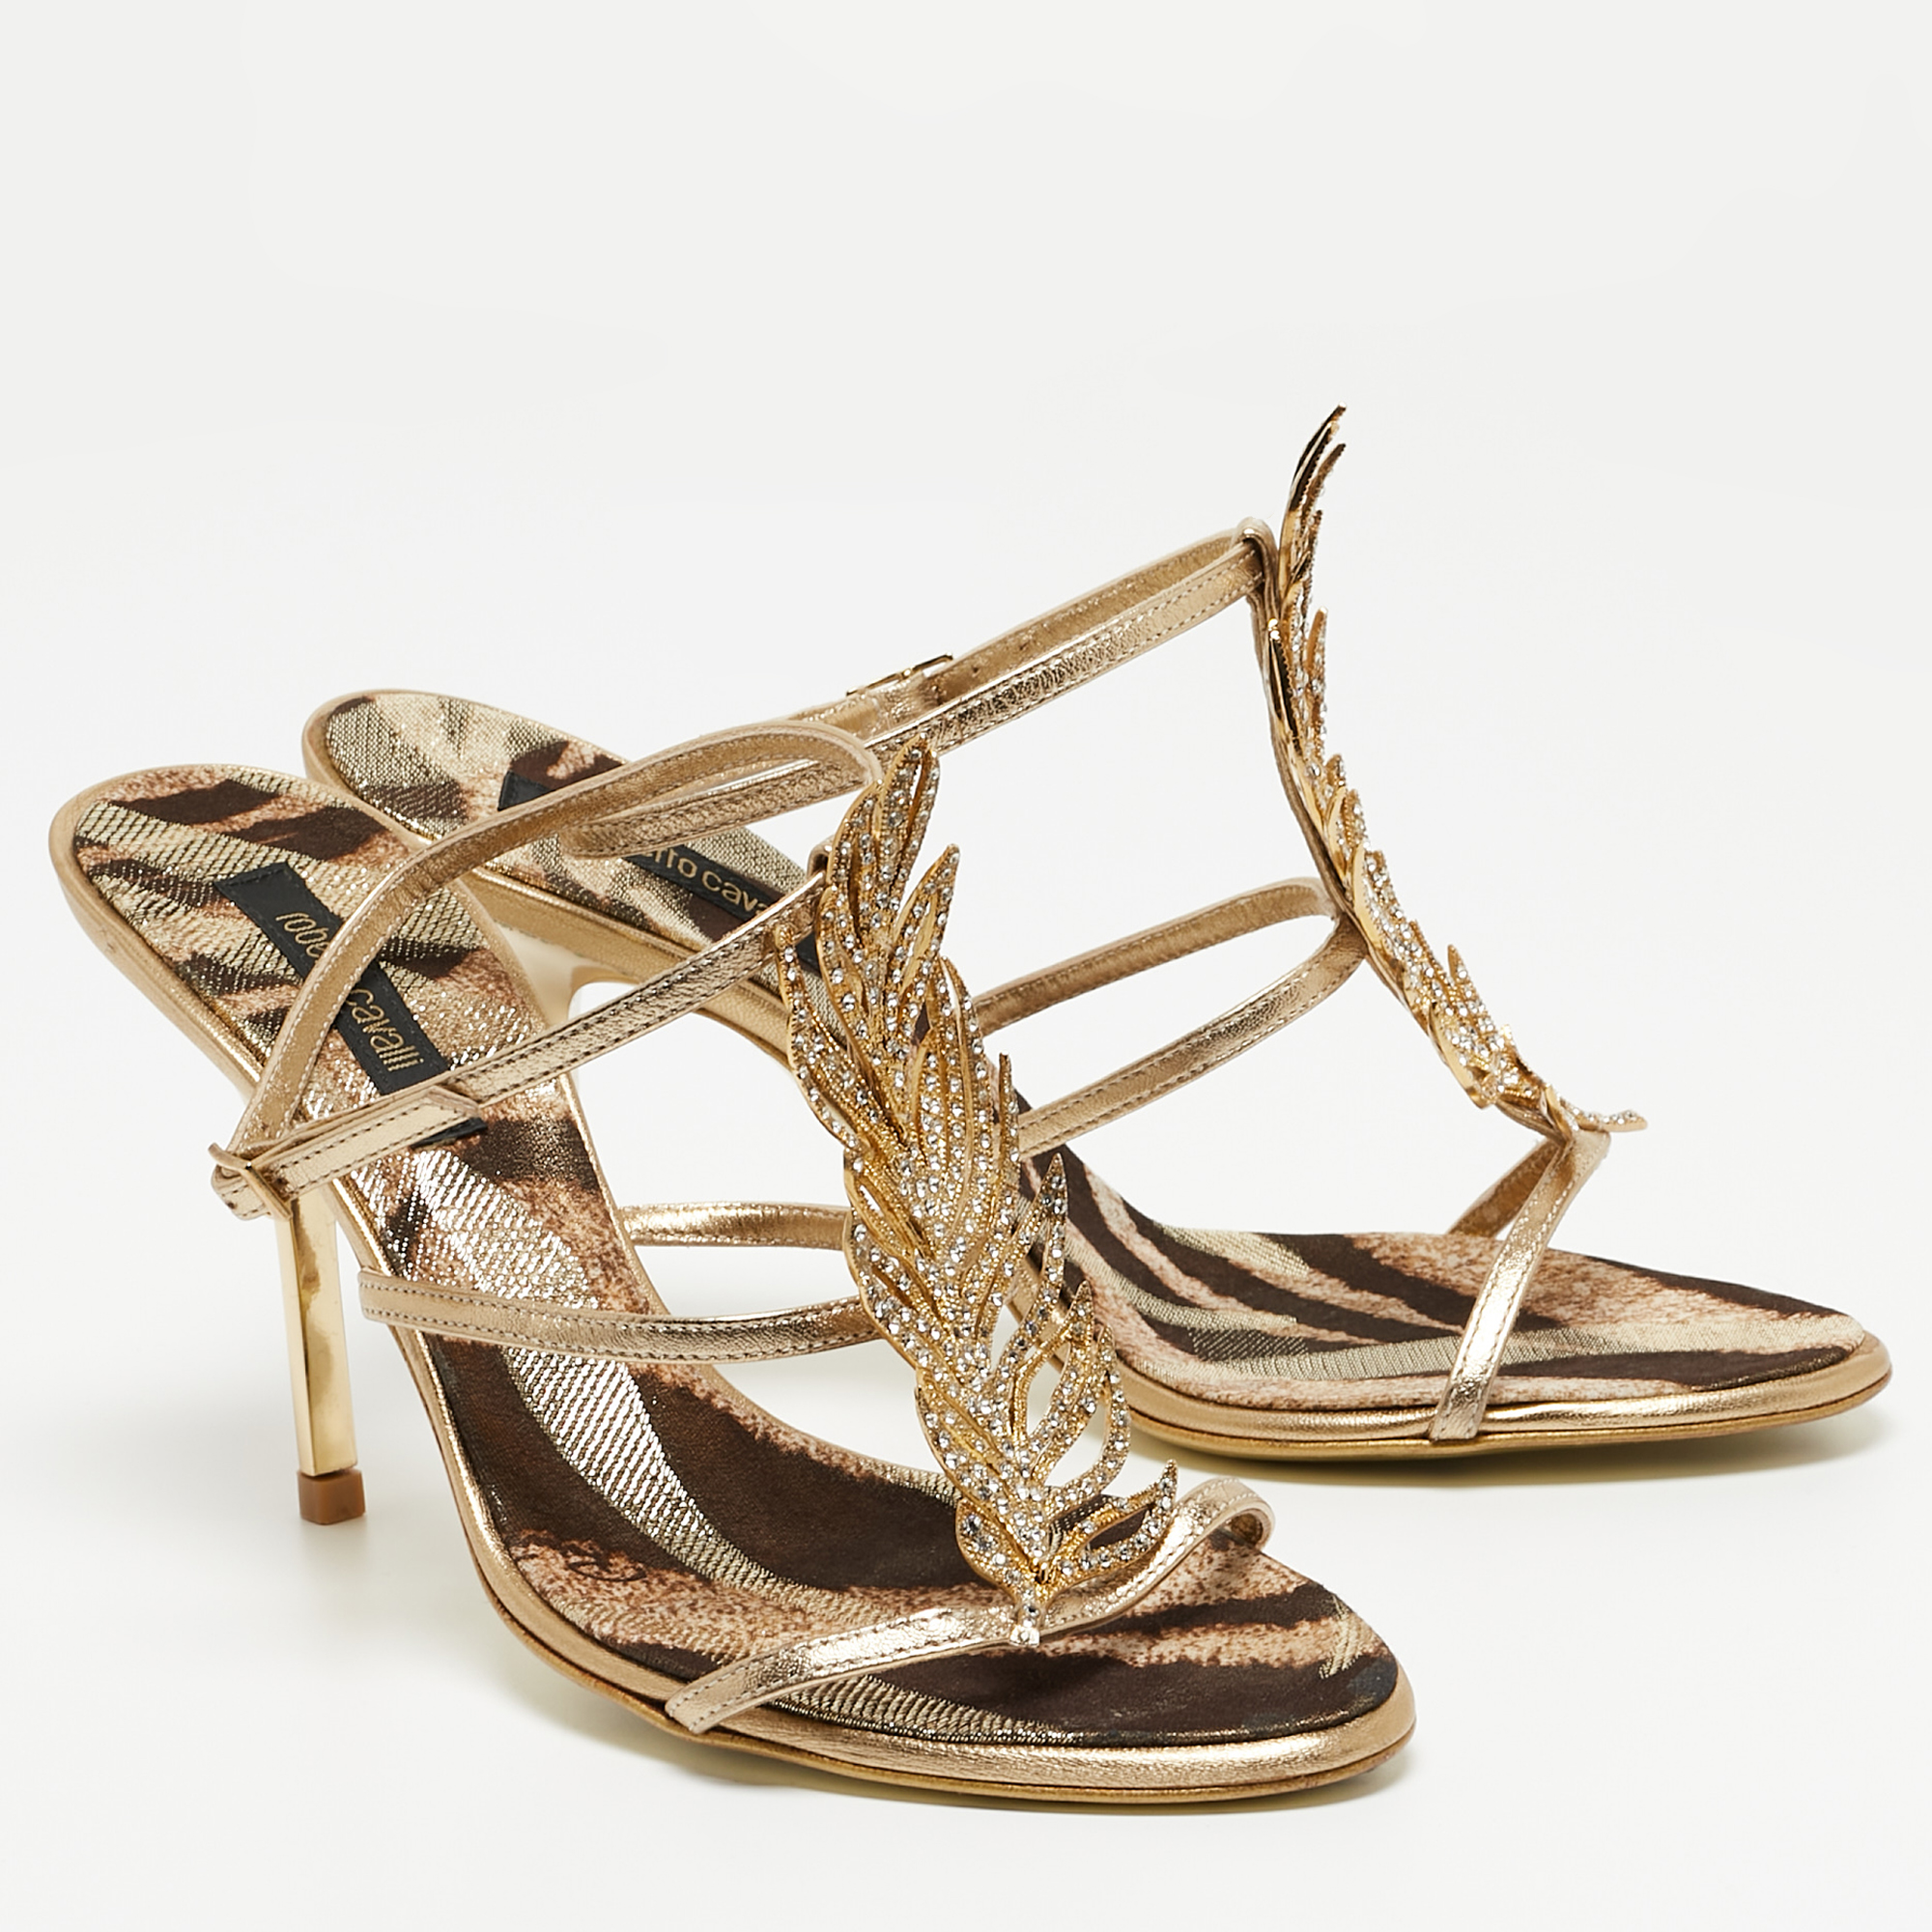 Roberto Cavalli Metallic Gold Ankle Strap Sandals Size 39.5